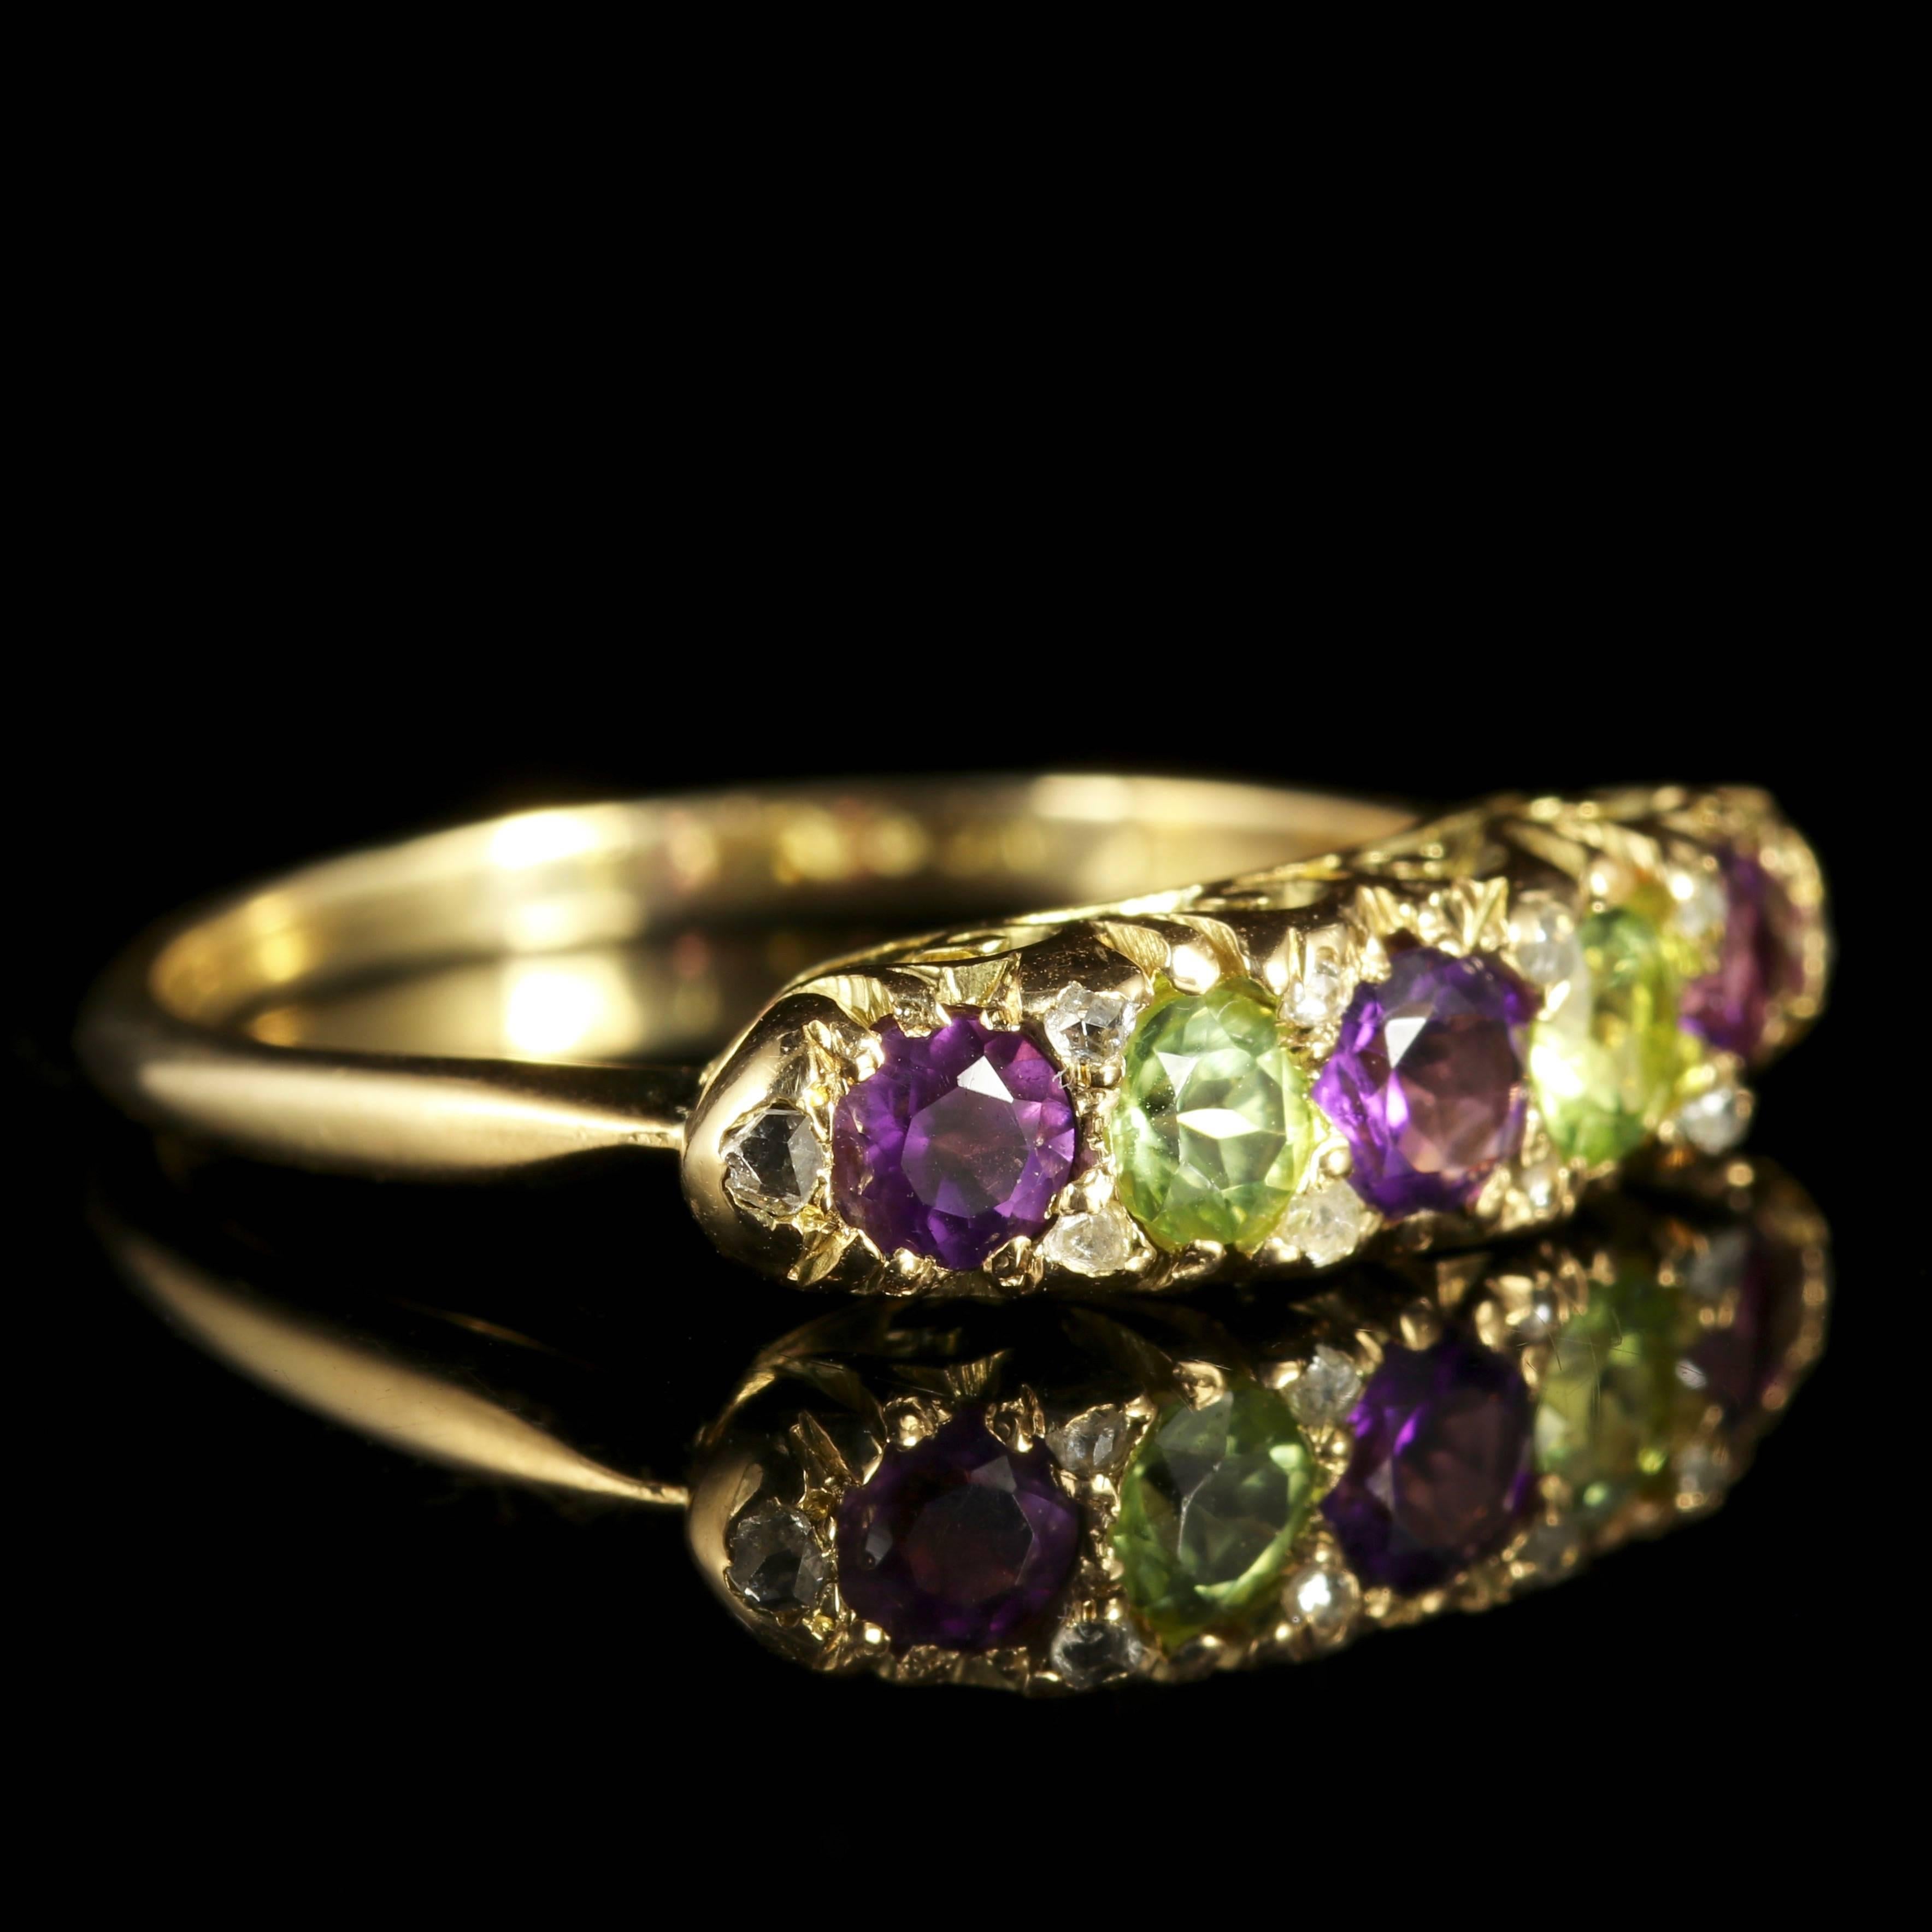 Women's Antique Victorian Suffragette Ring 18 Carat Gold, circa 1900